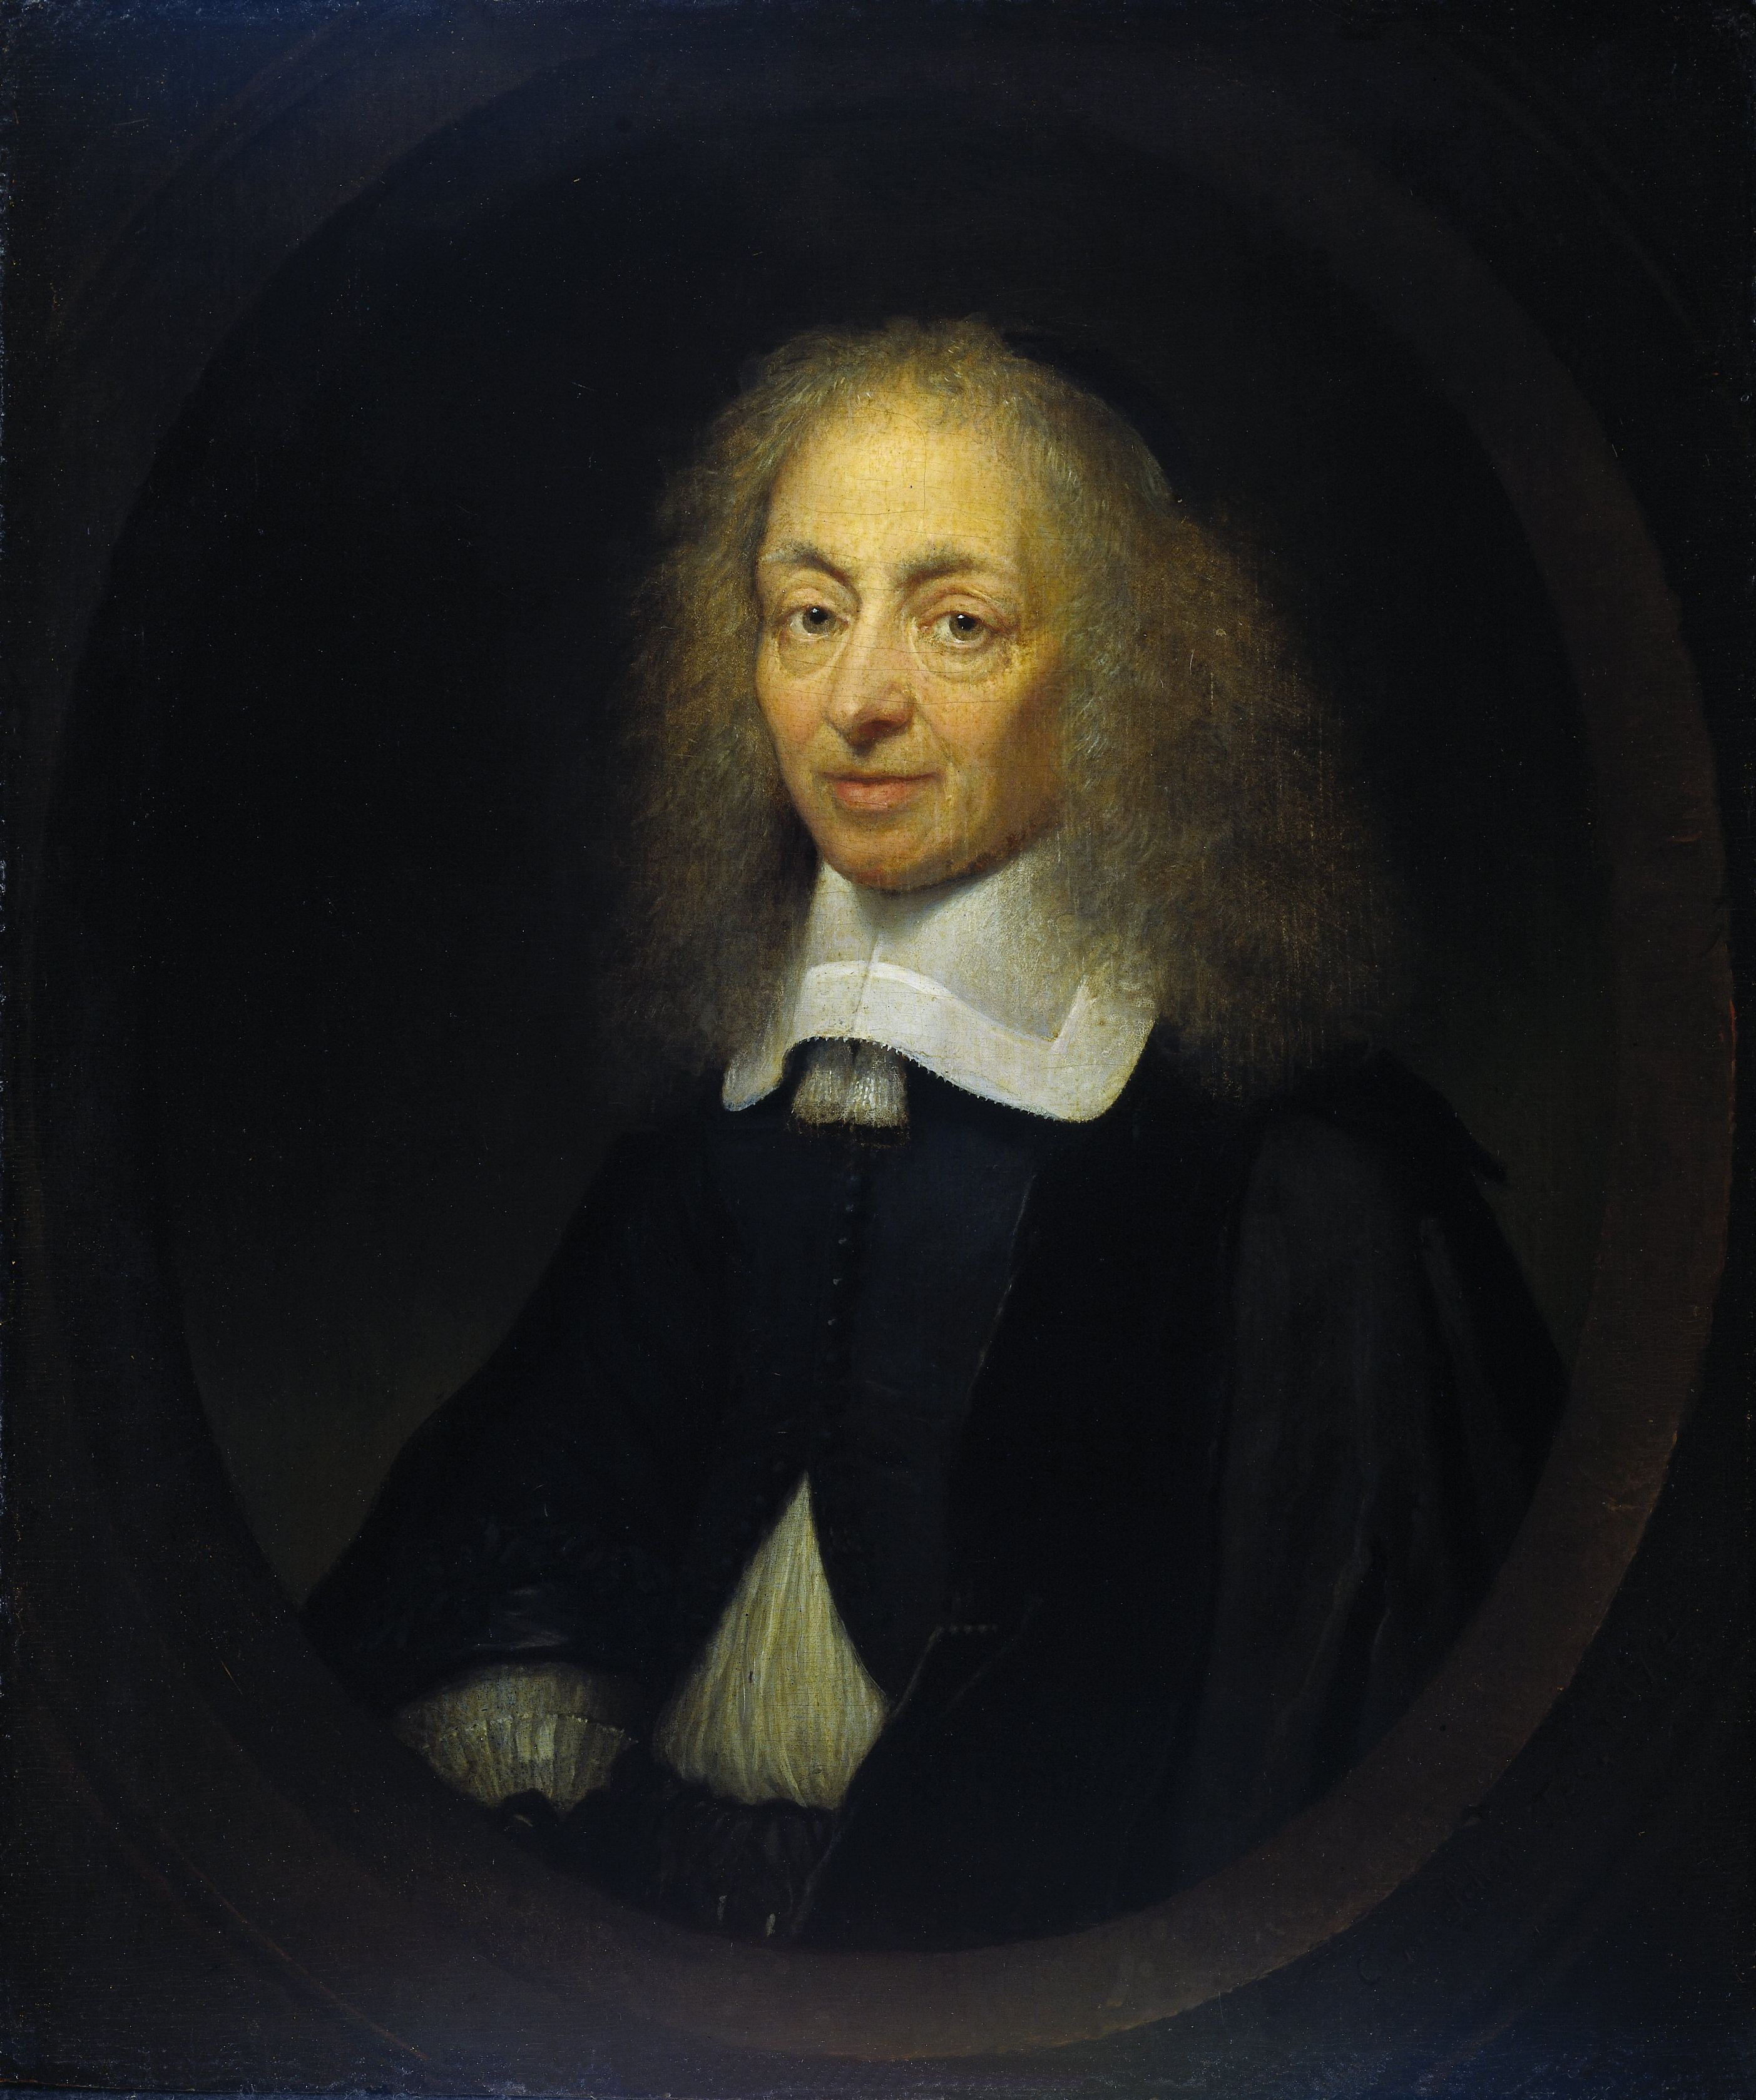 Constantijn_Huygens_(1596-1687)_by_Caspar_Netscher